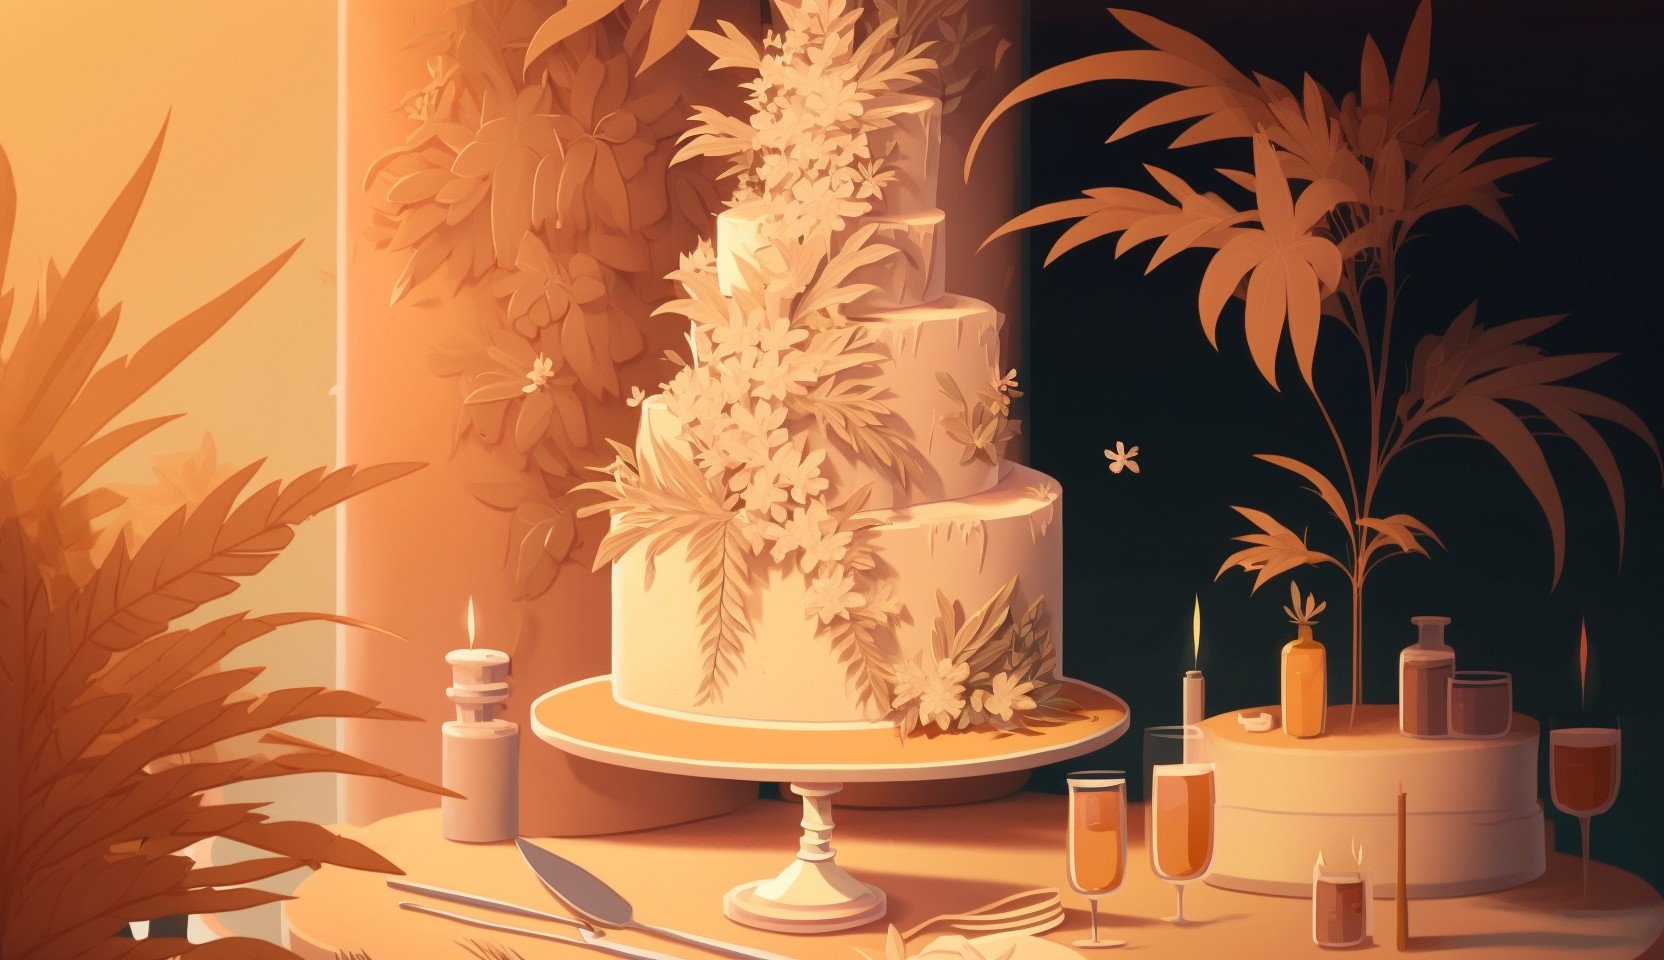 HHC Wedding Cake の花のテストと意見: 味と効果?